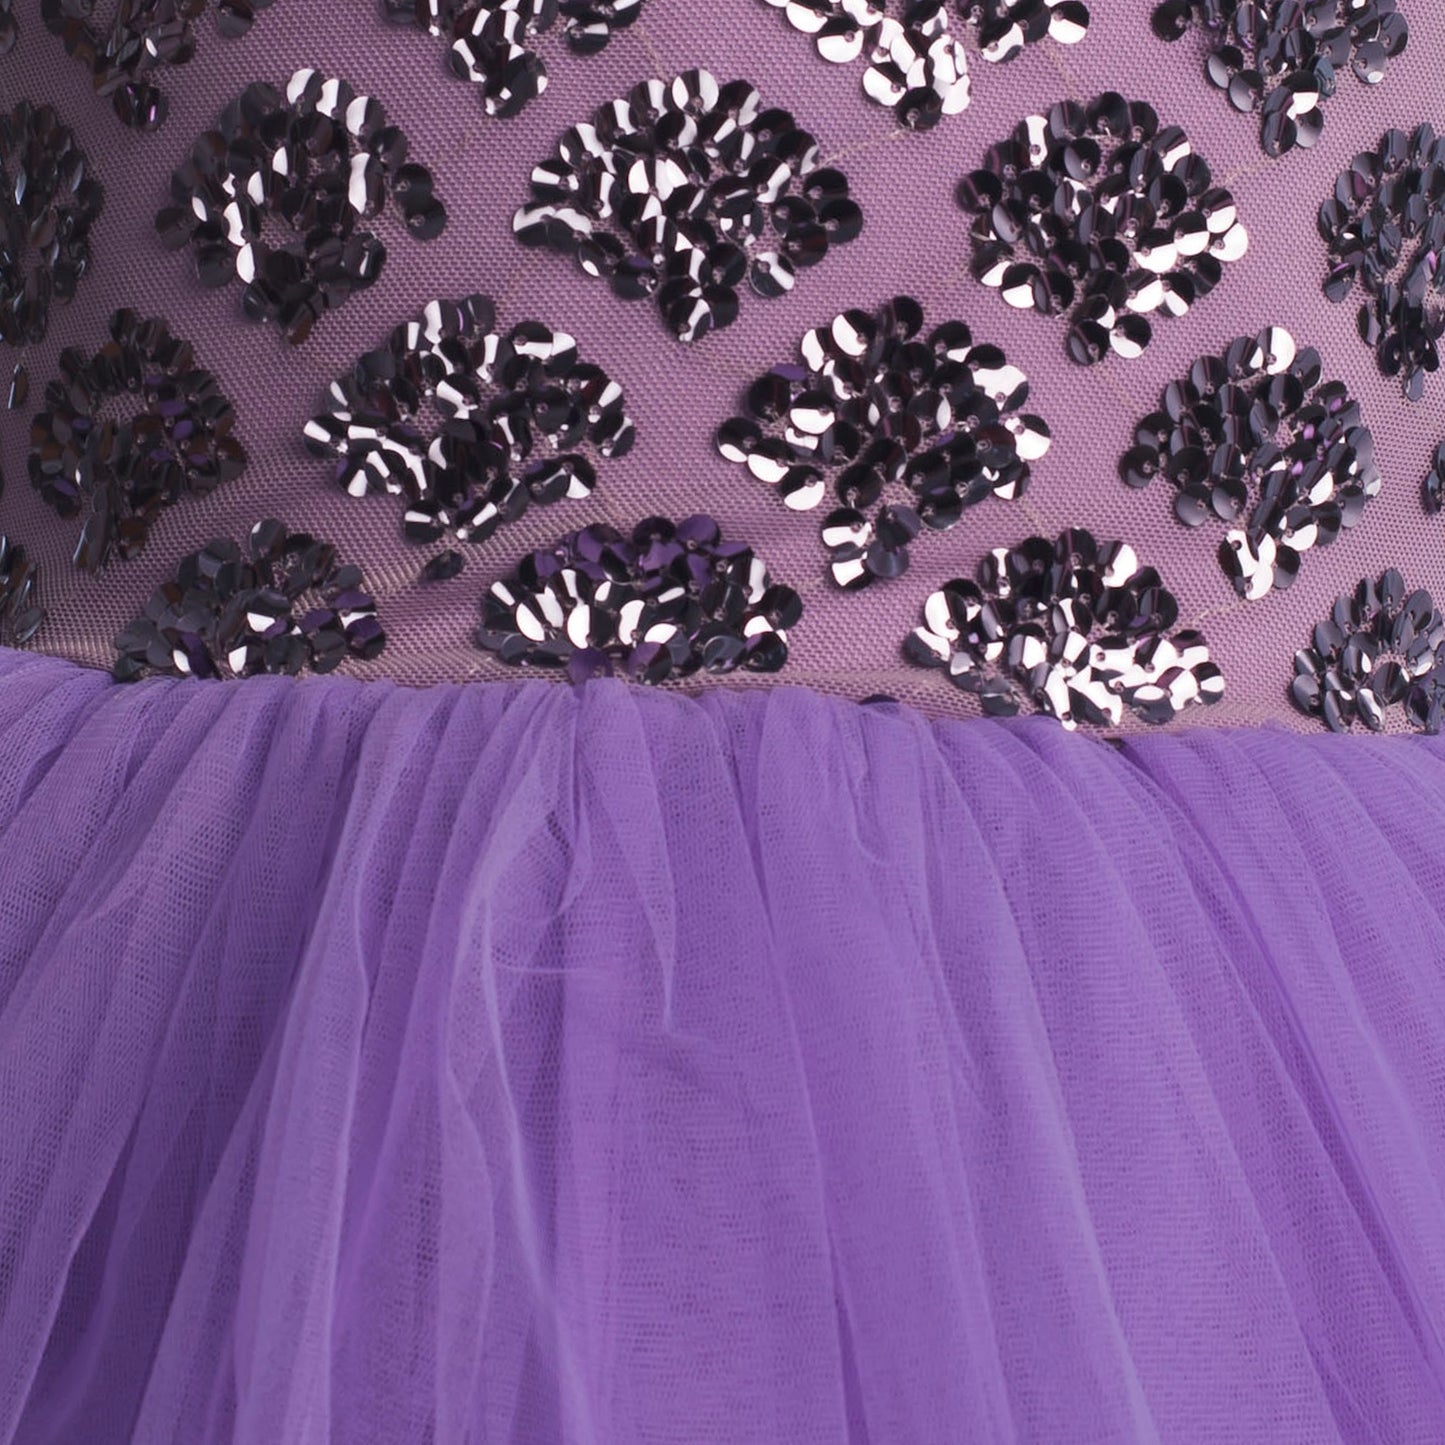 Purple Sparkle Princess Dress - Birthday Special